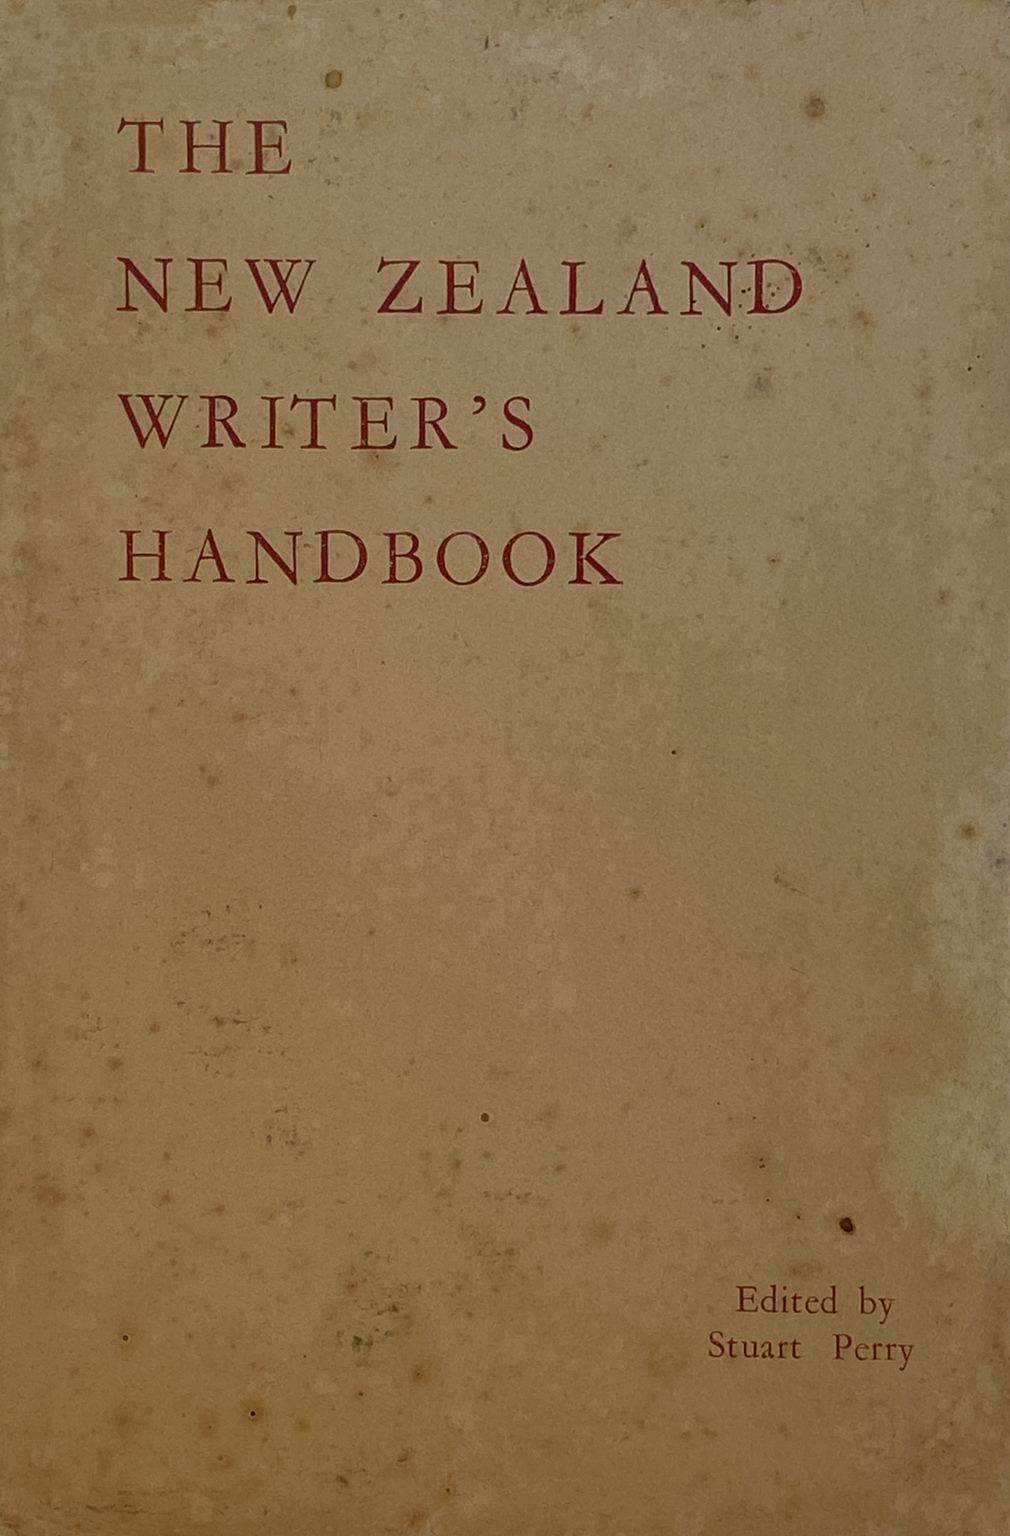 THE NEW ZEALAND WRITER'S HANDBOOK